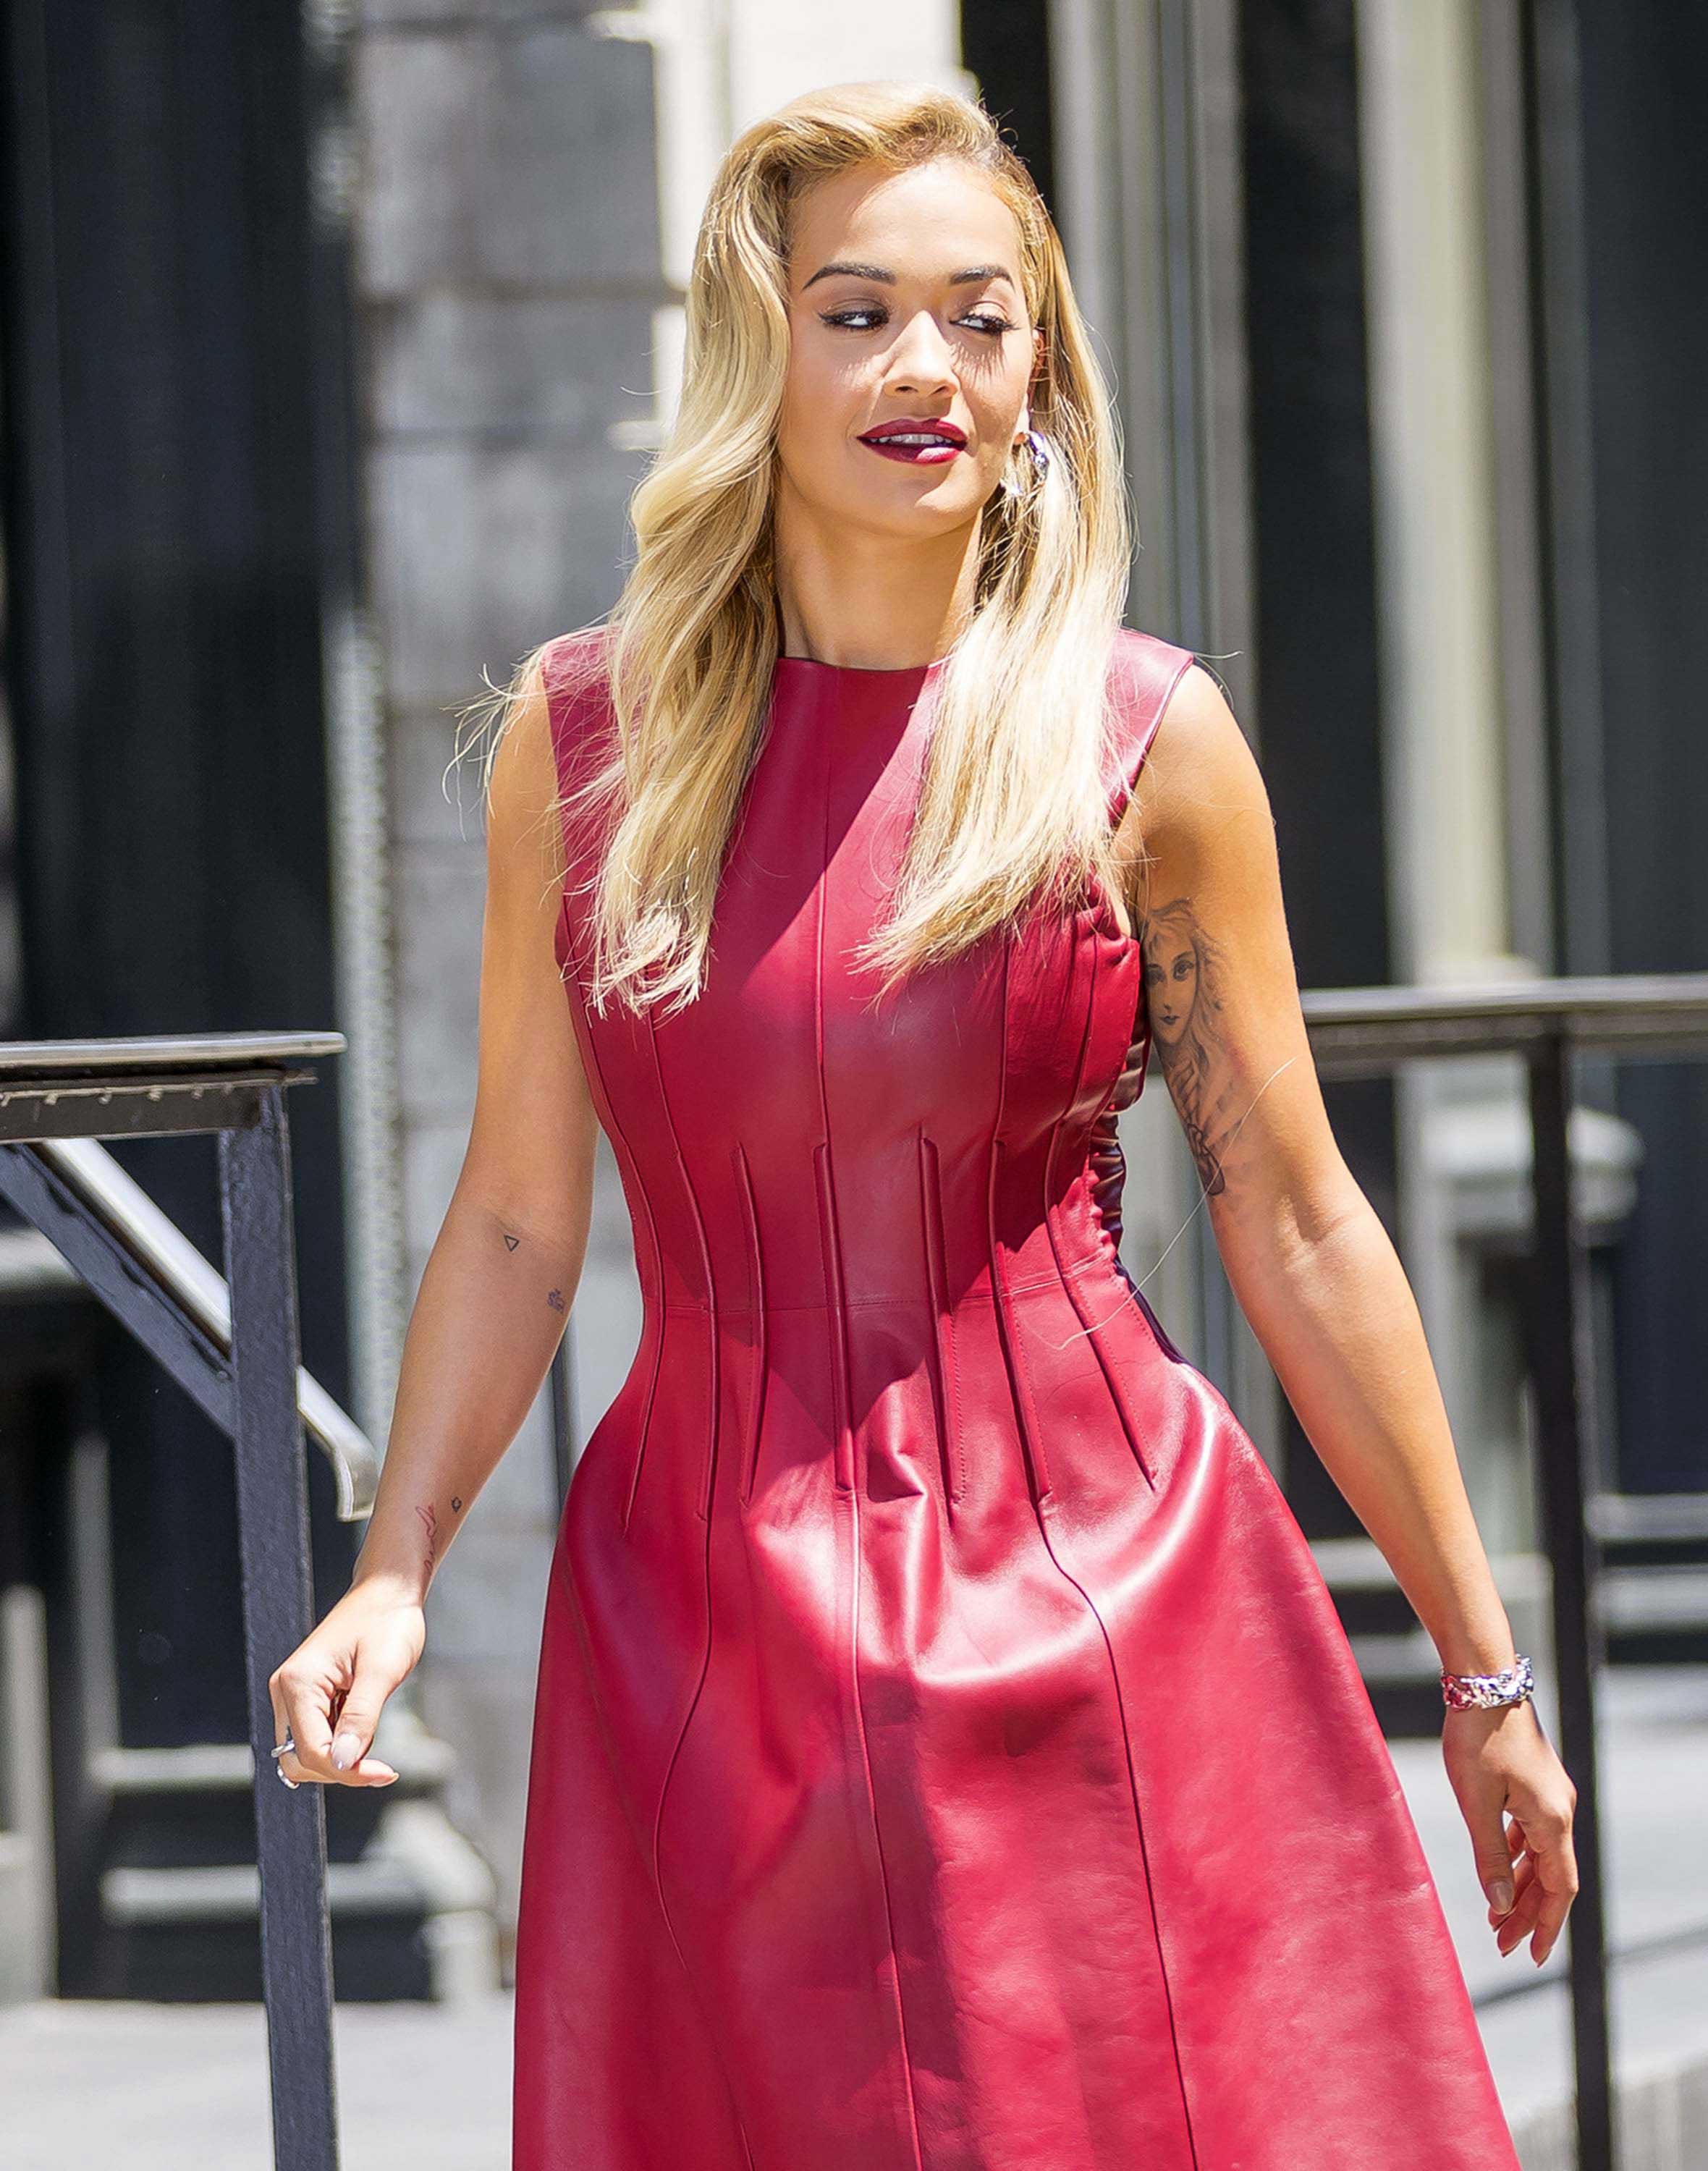 Rita Ora is seen in New York City